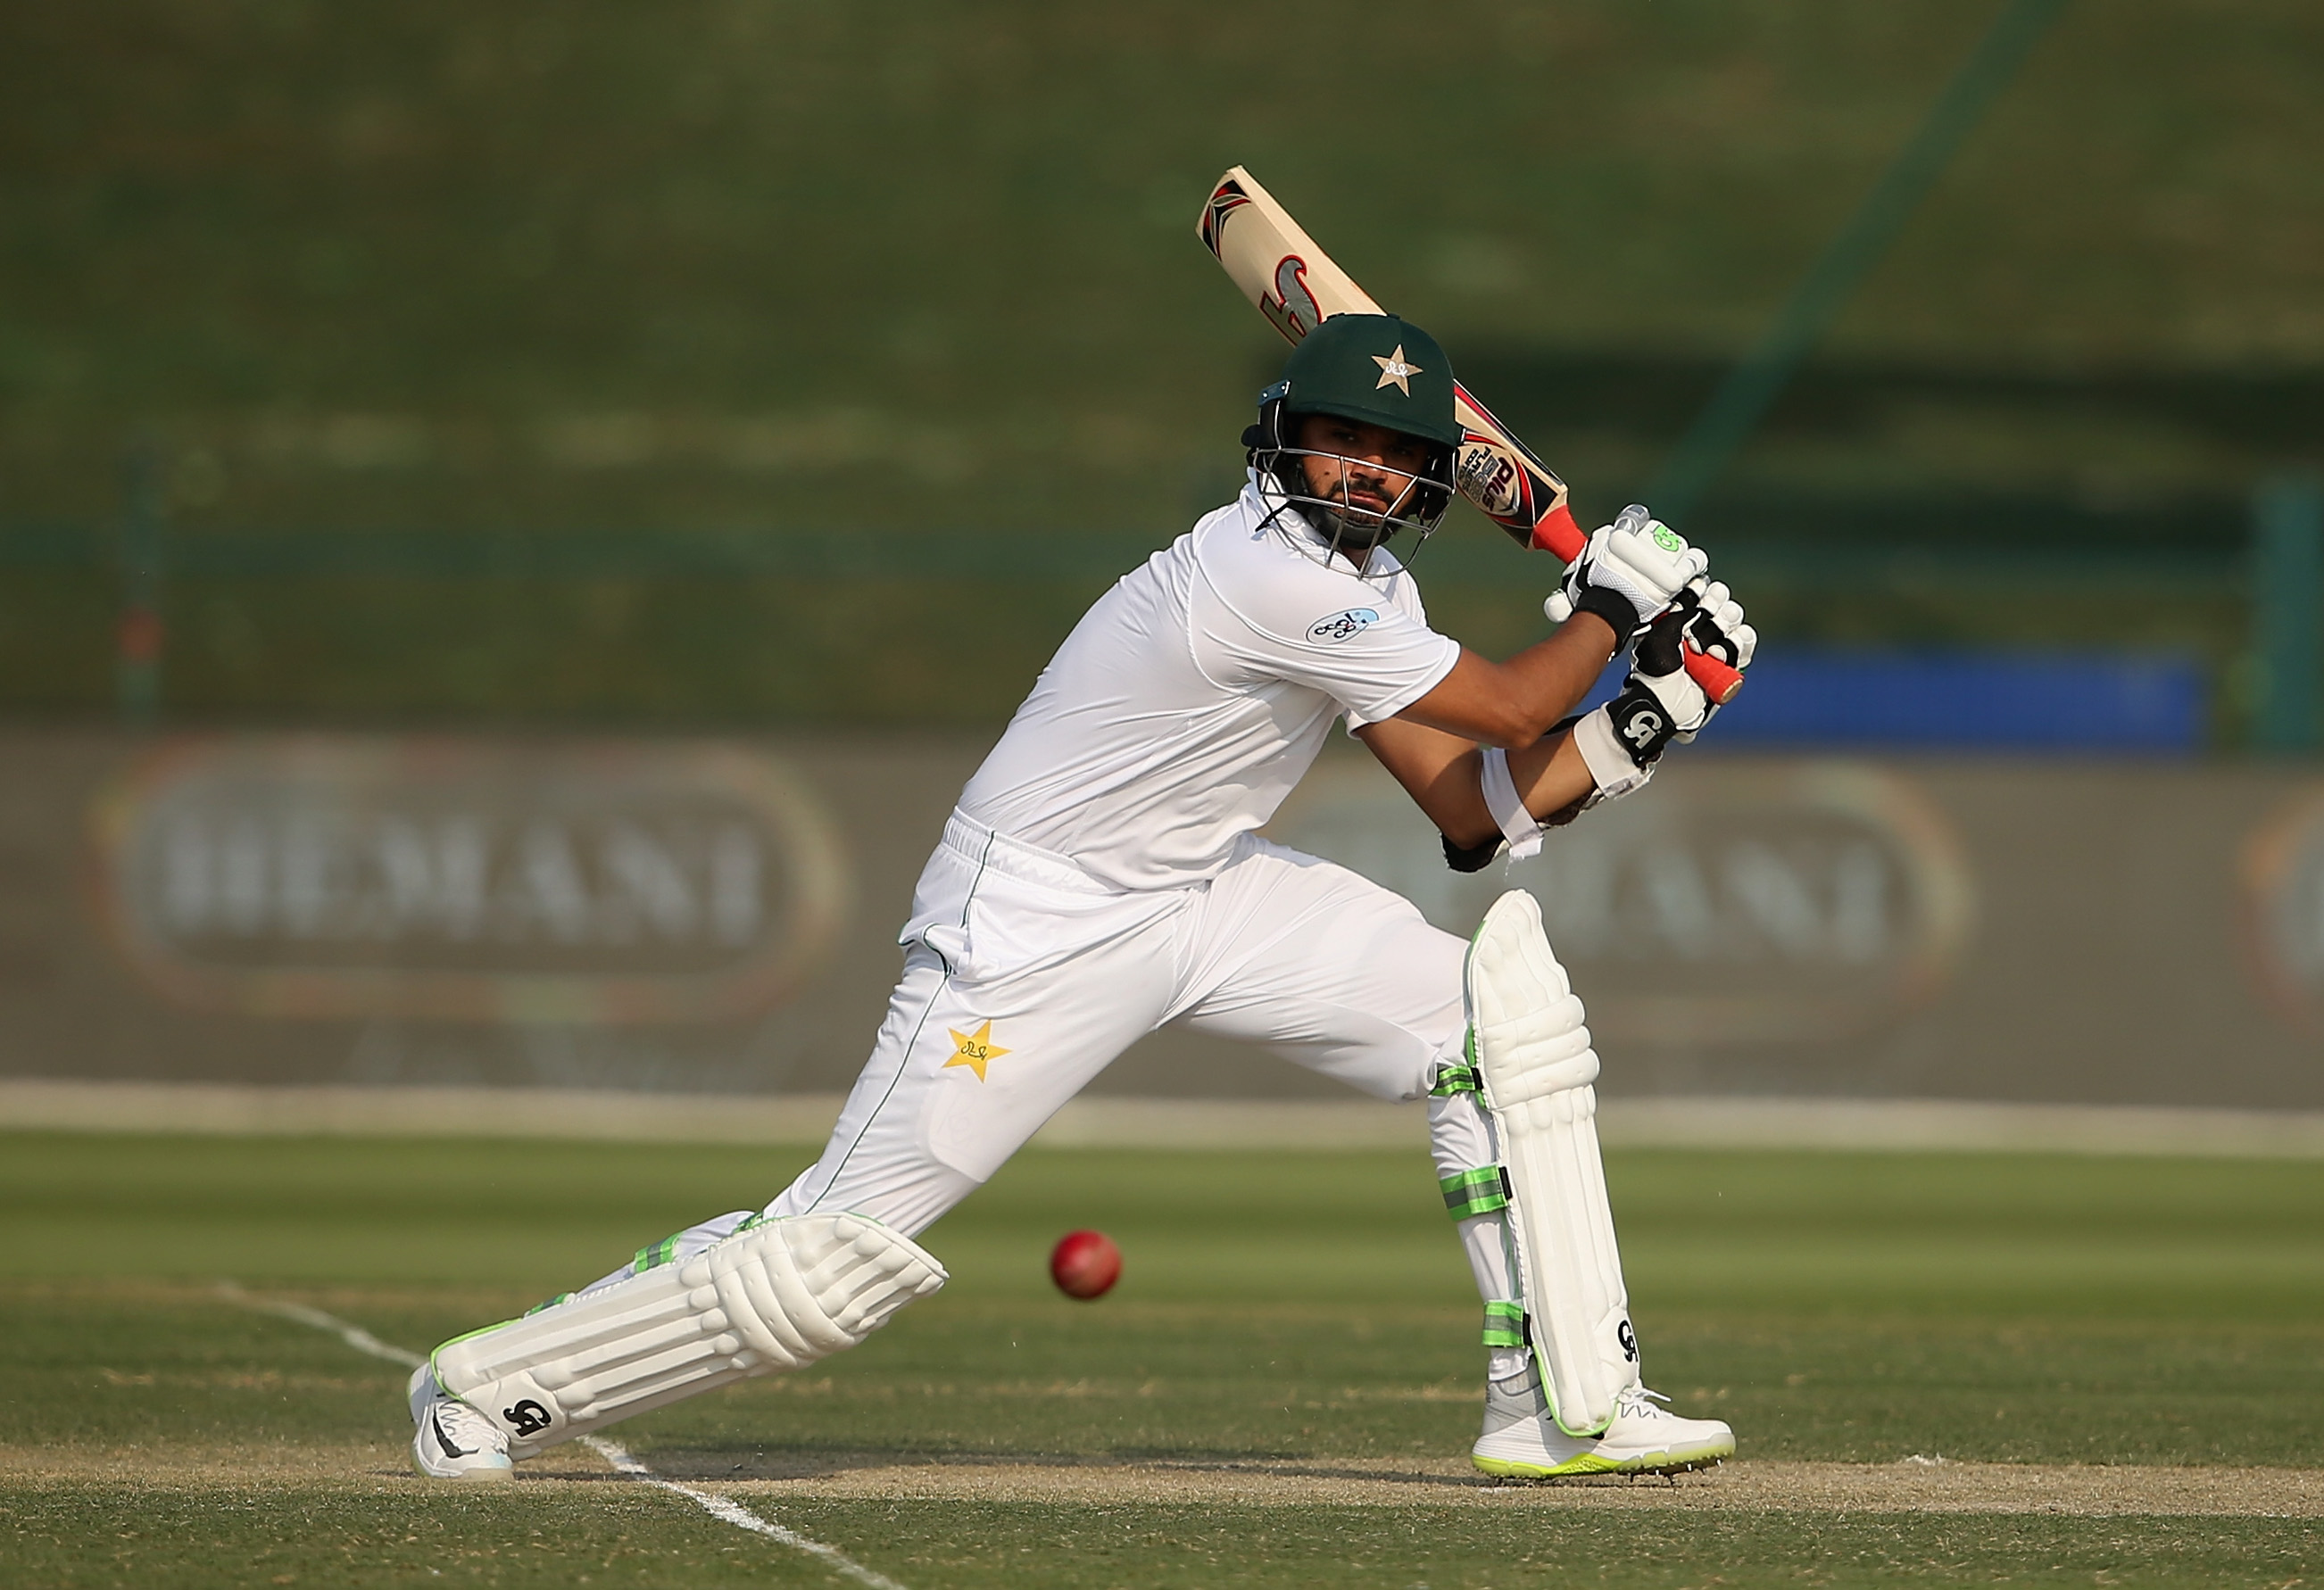 PAK vs SL | Hope Test cricket returns regularly to Pakistan, hopes Azhar Ali